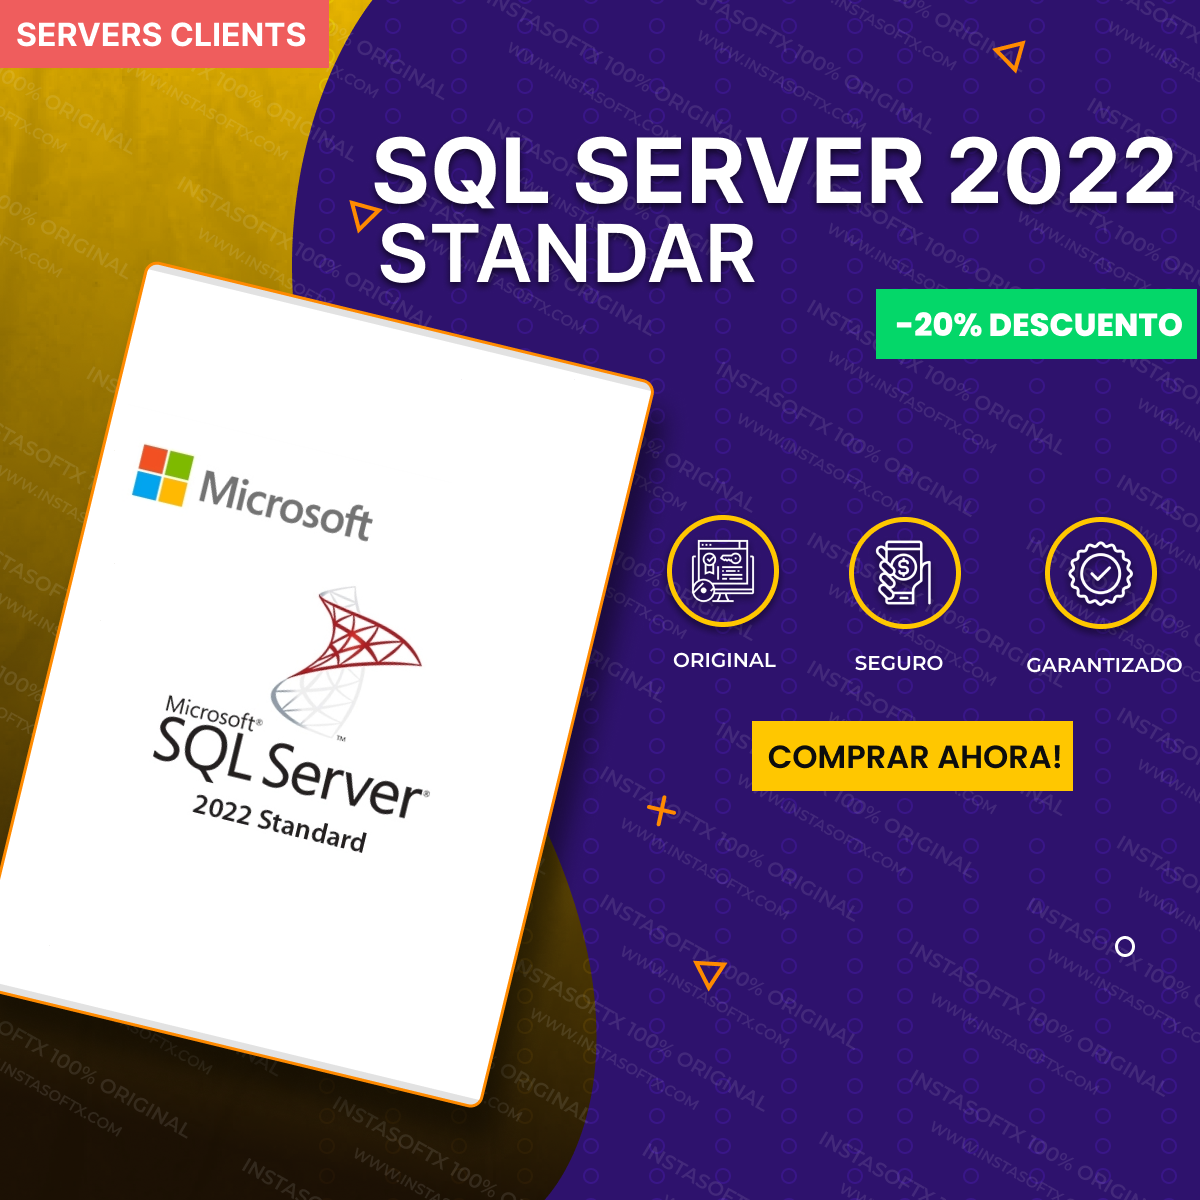 SQL SERVER STANDAR 2022